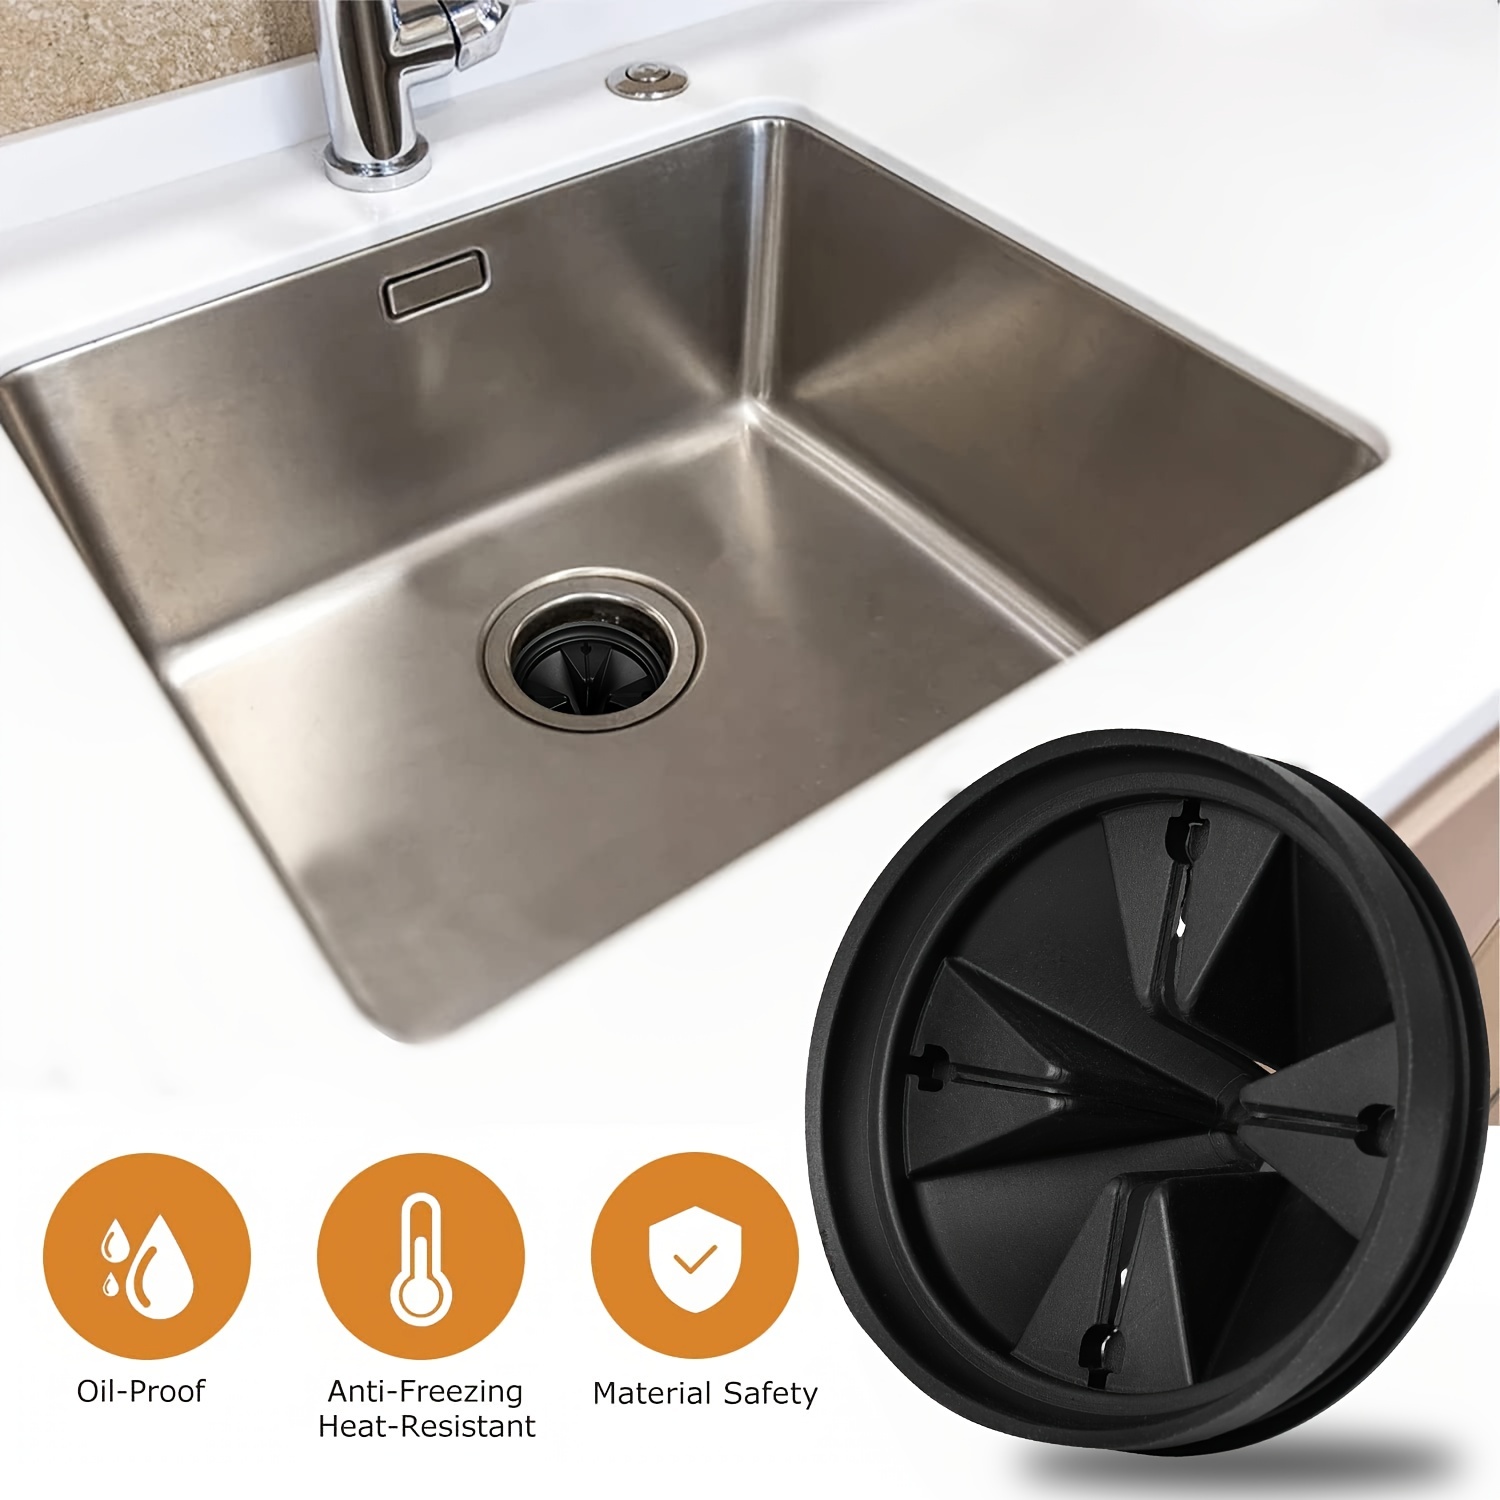 Food Waste Disposer Accessories Multi-function Sink Baffle Drain Plugs  Splash Guards Fits Whirlaway